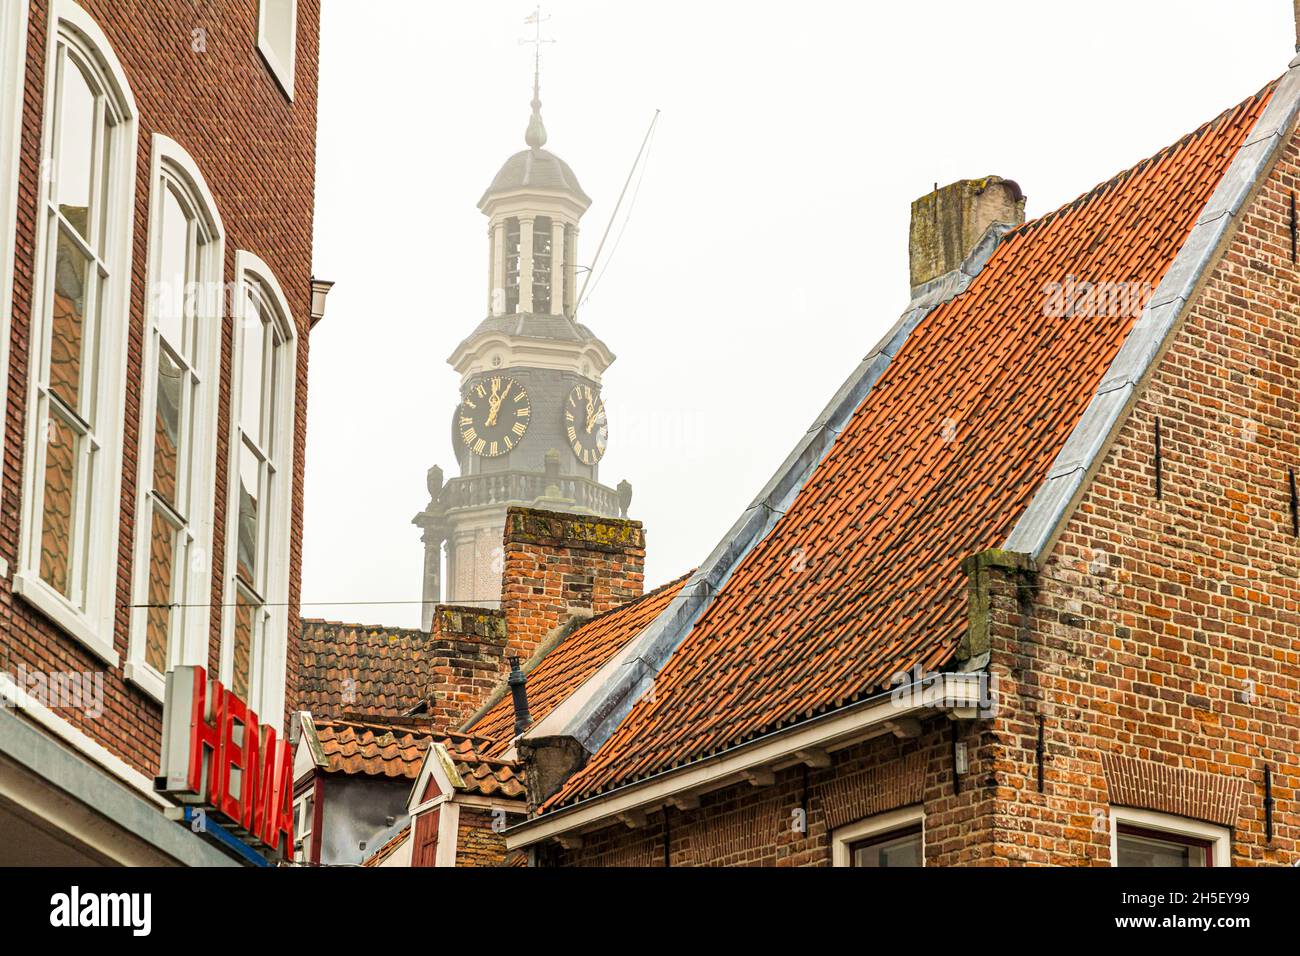 Tower clock of the Wijnhuistoren above the roofs of Zutphen, Netherlands Stock Photo